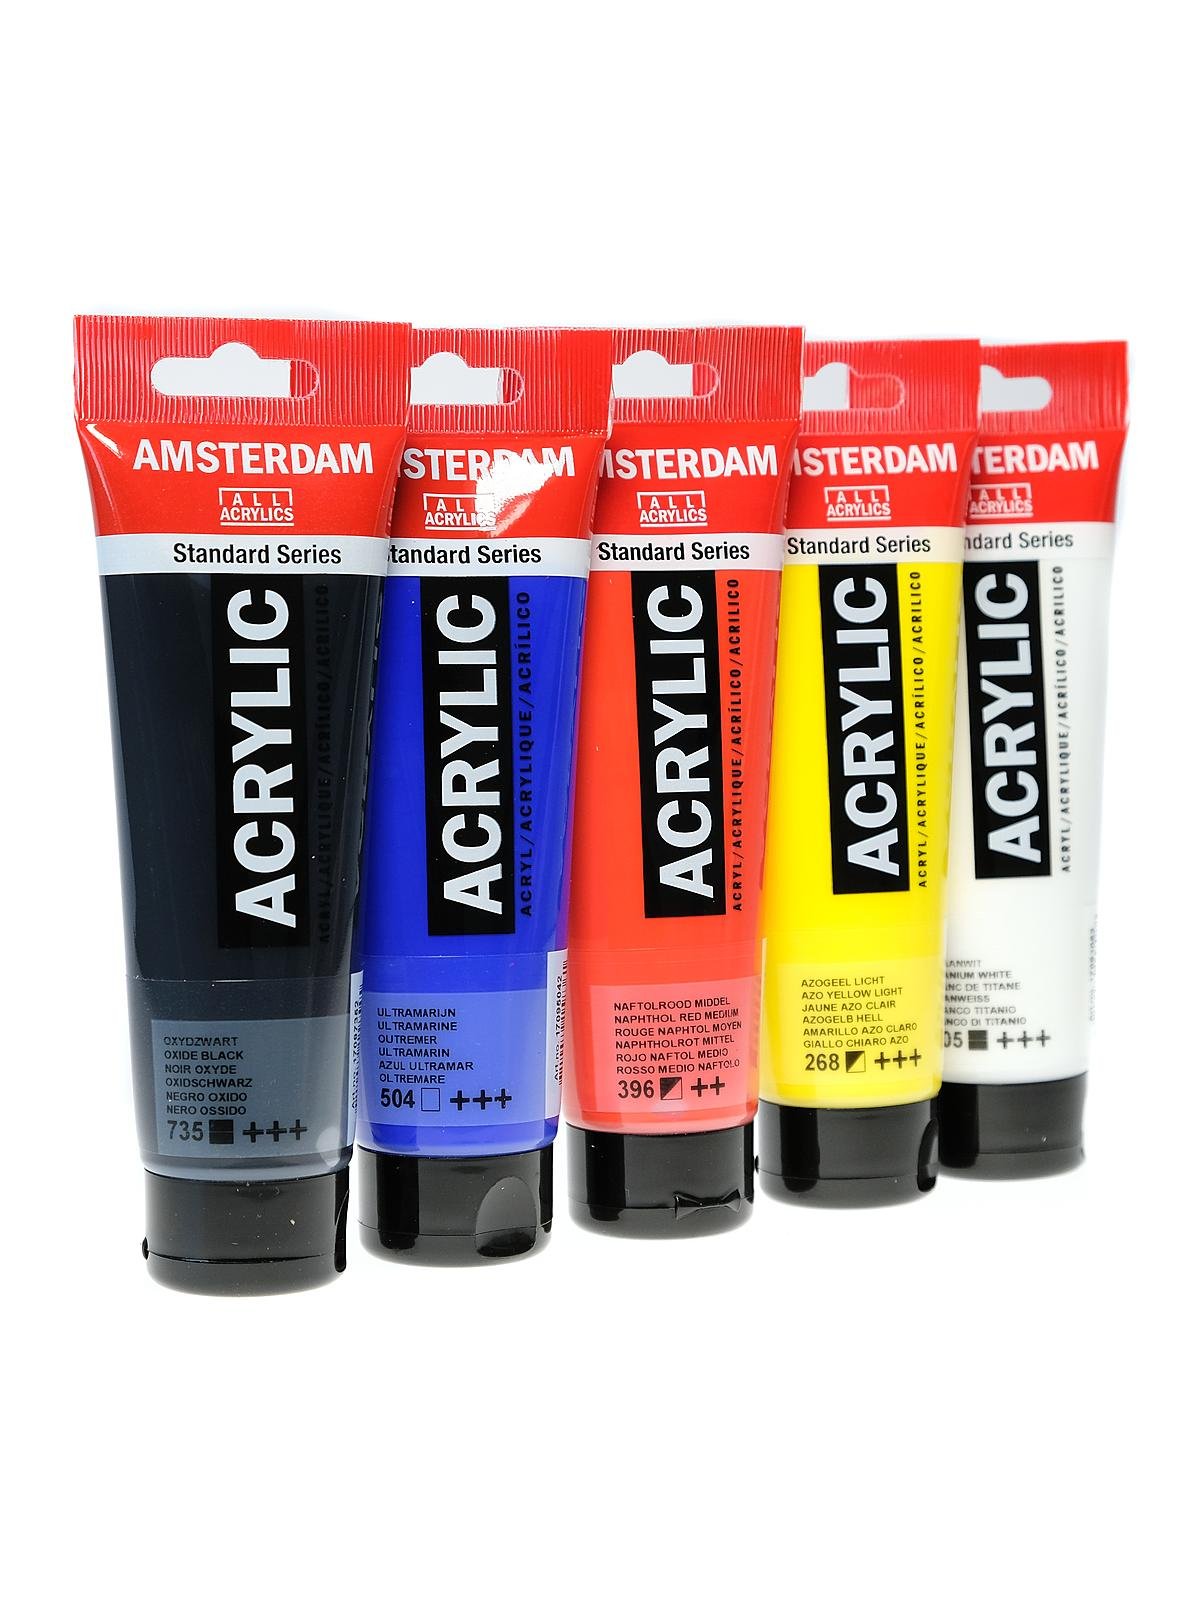 Amsterdam Standard Series Acrylic Paints